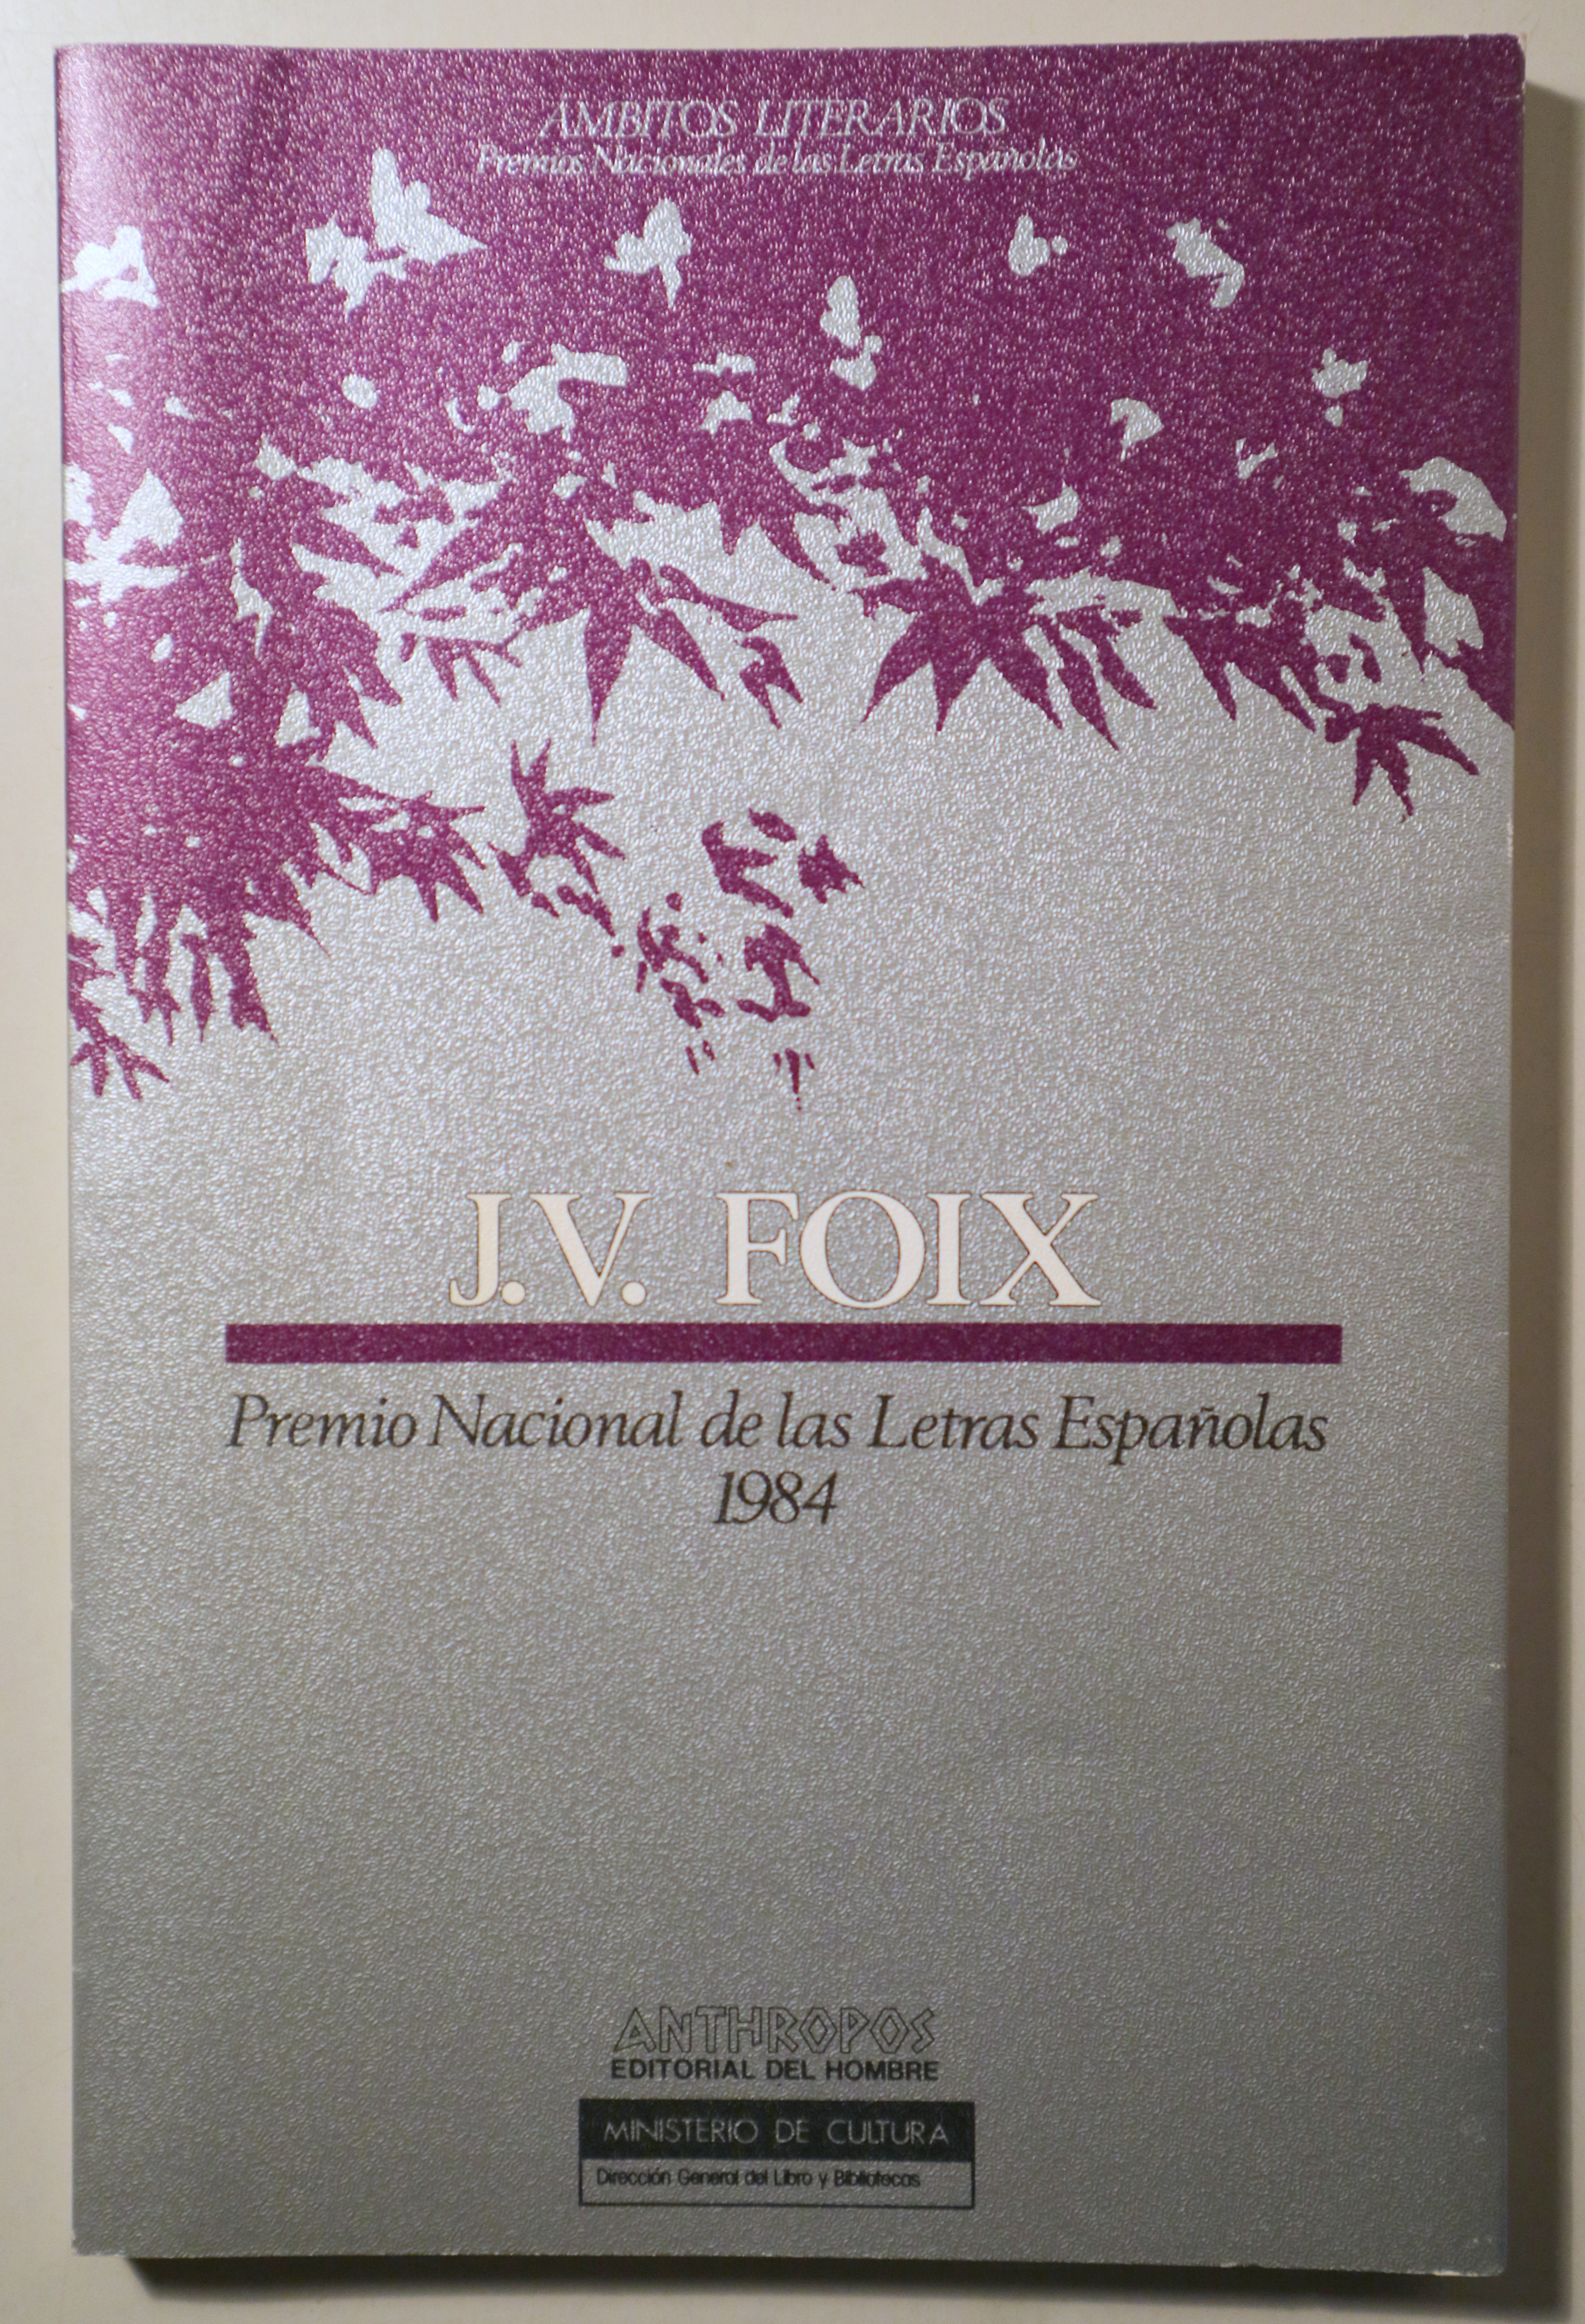 J.V. FOIX. PREMIO NACIONAL DE LAS LETRAS ESPAÑOLAS 1984 - Barcelona 1989